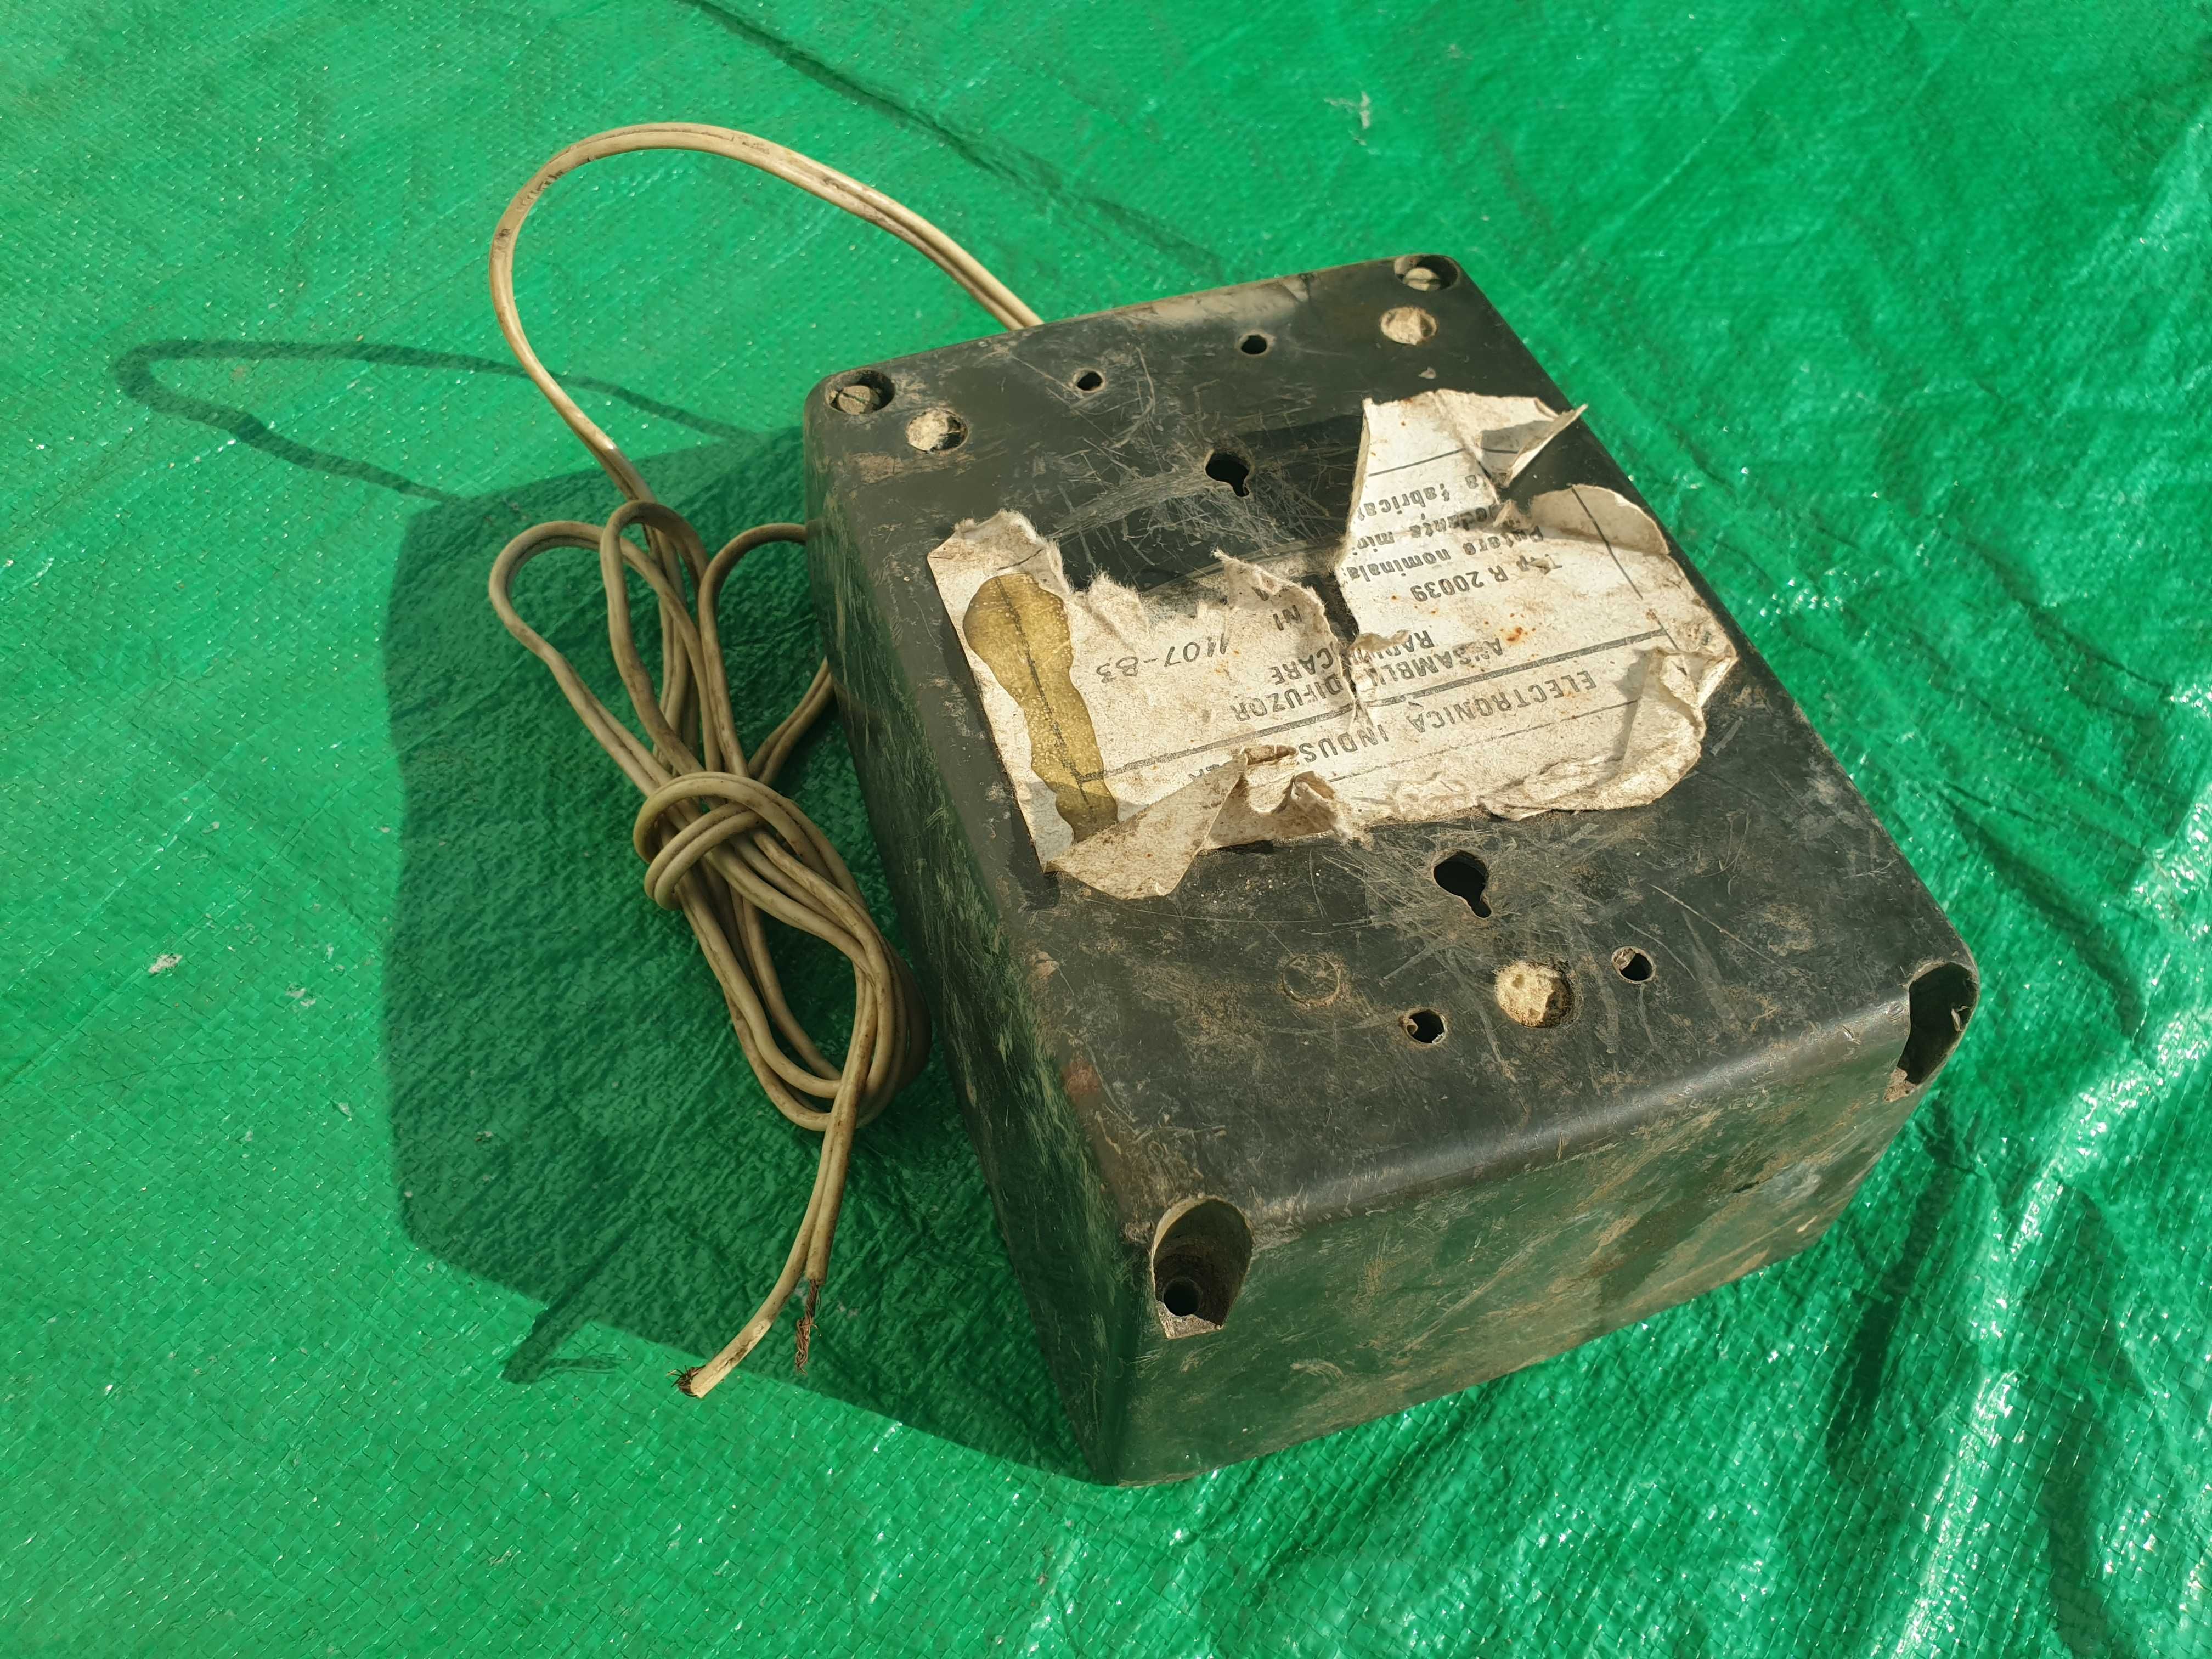 1 Boxa radioficare cu potentiometru volum,ELECTRONICA industriala 1983